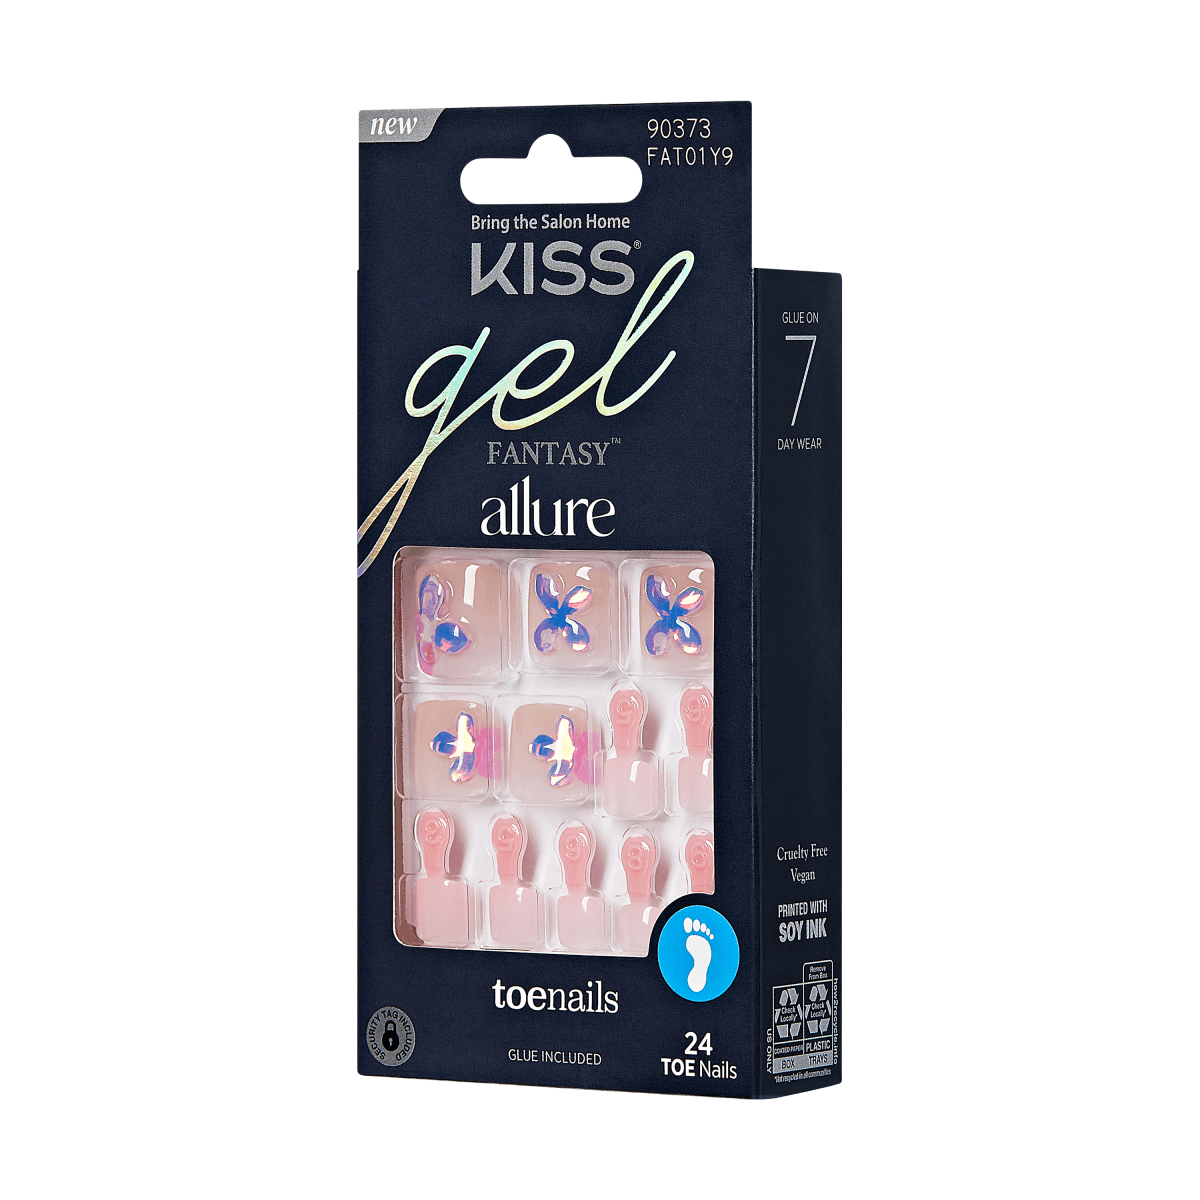 KISS Gel Fantasy Allure Toenails - Blushing